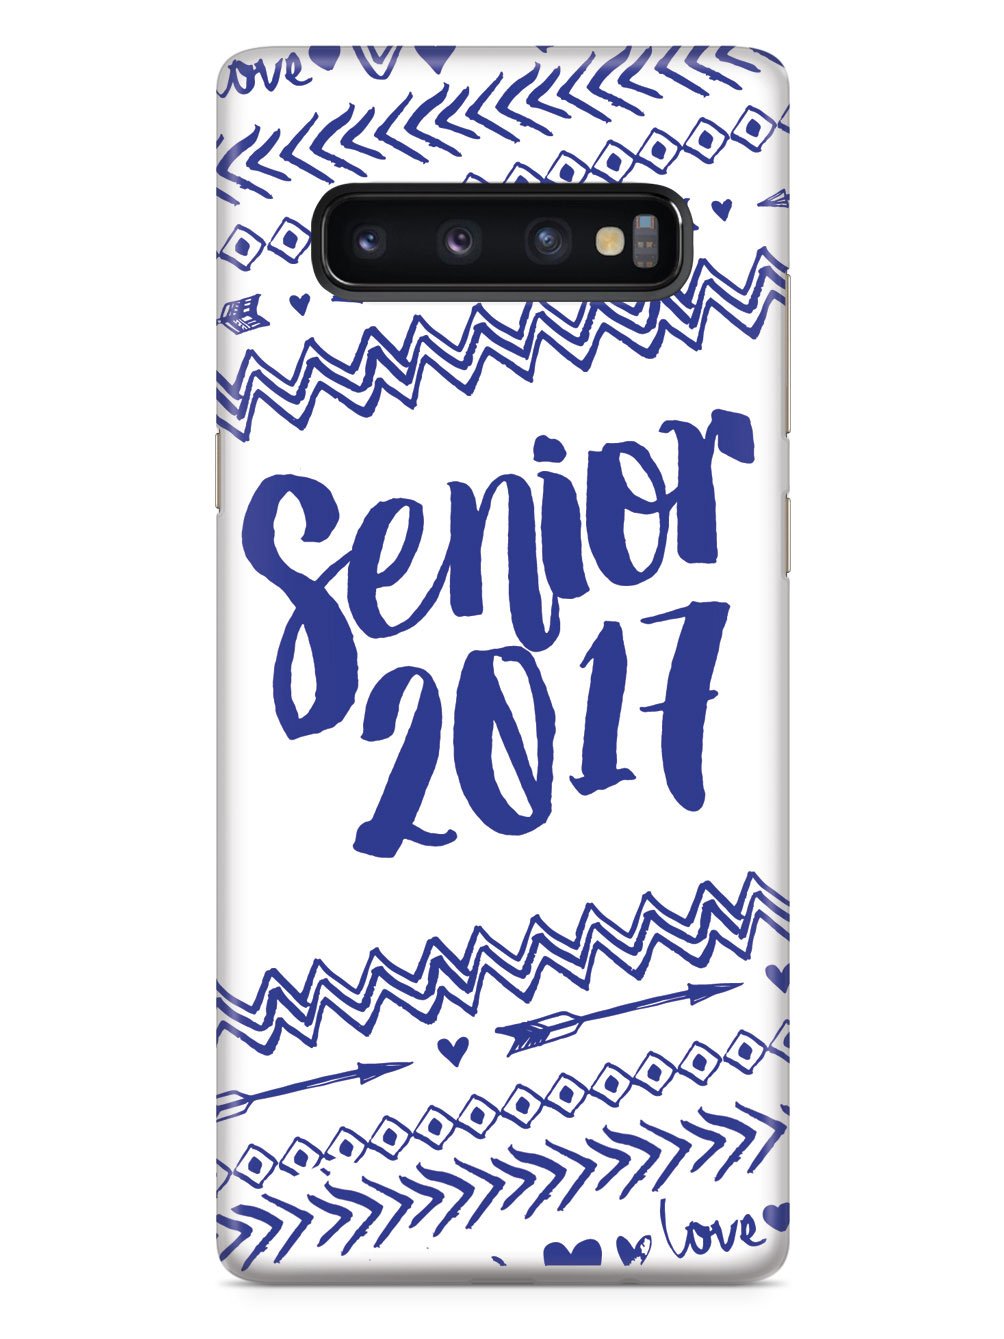 Senior 2017 - Blue Case